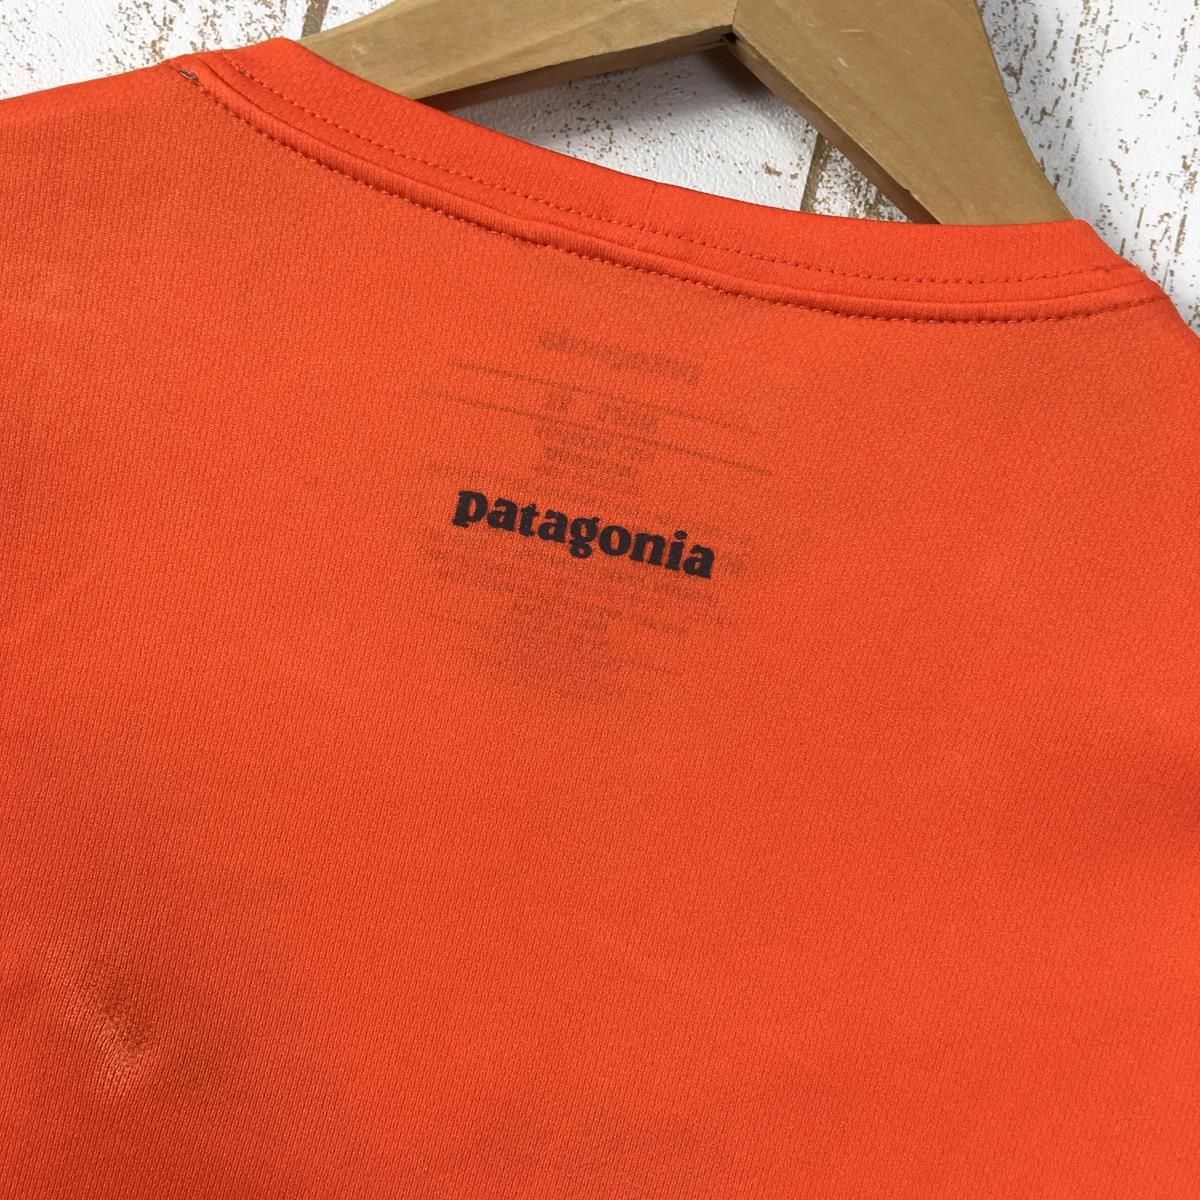 MENs XS パタゴニア ショートスリーブ フォアランナー シャツ Short Sleeve Fore Runner Shirt 生産終了モデル  入手困難 PATAGONIA 23658 オレンジ系